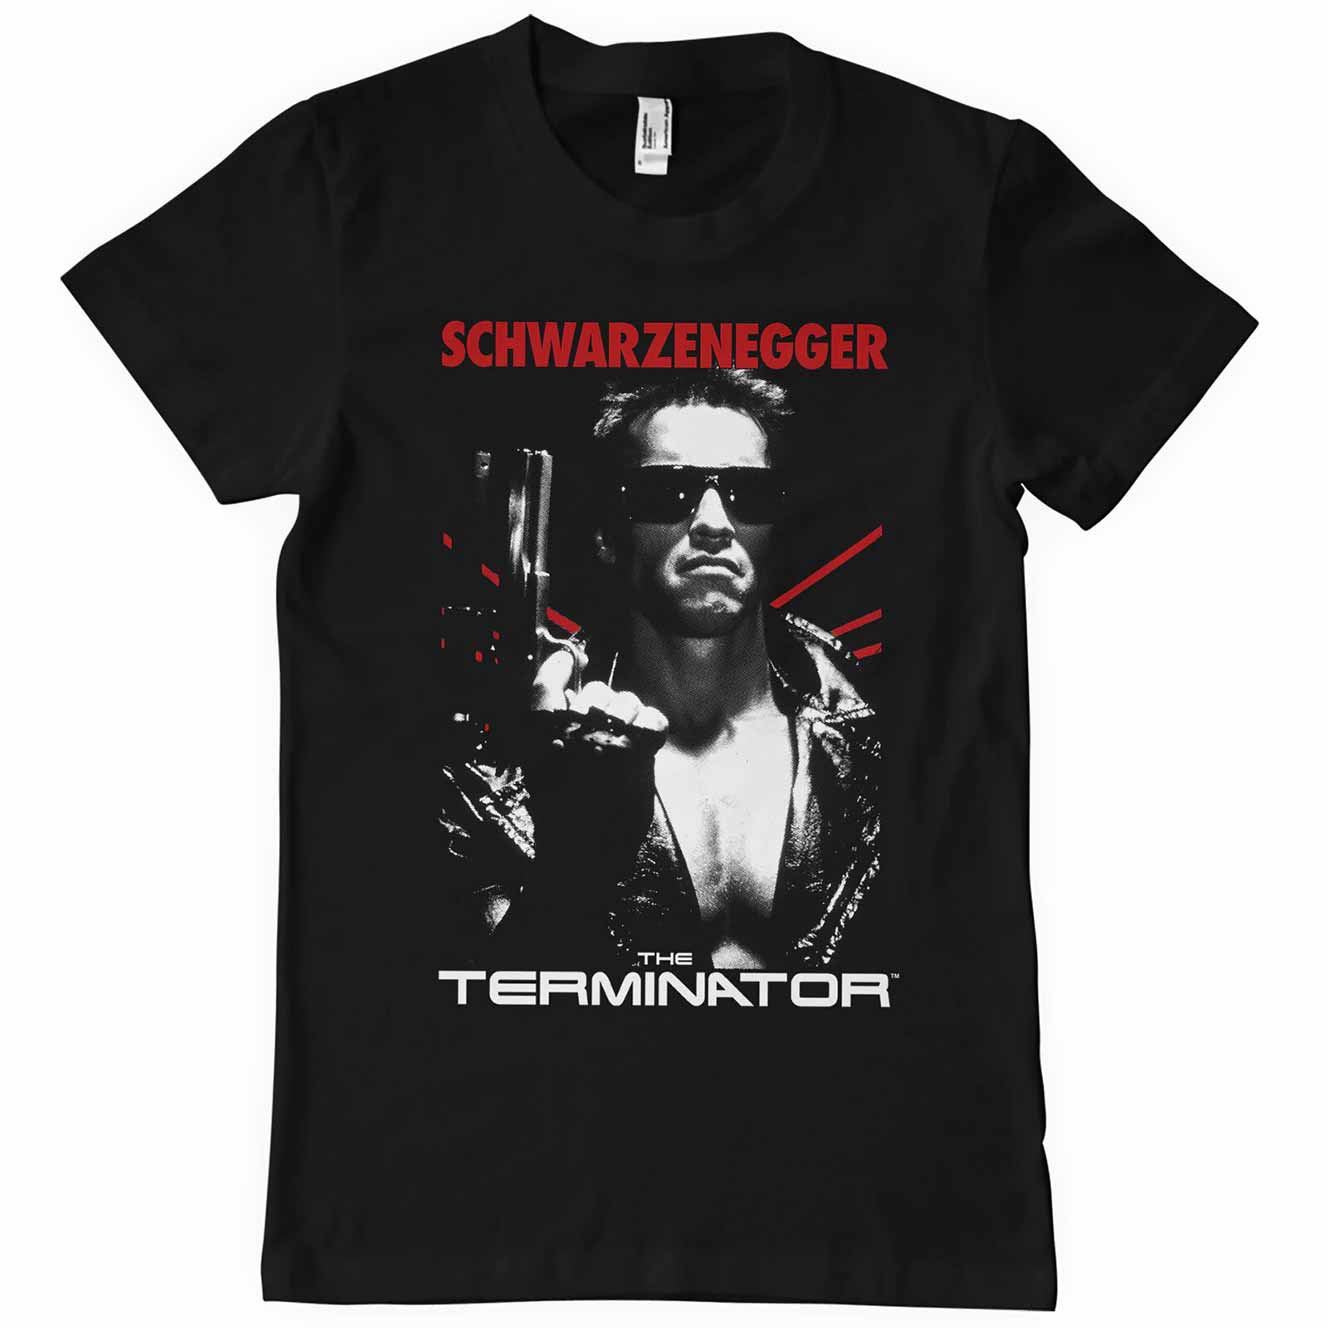 Sort Terminator T-shirt med plakaten trykt på brystet